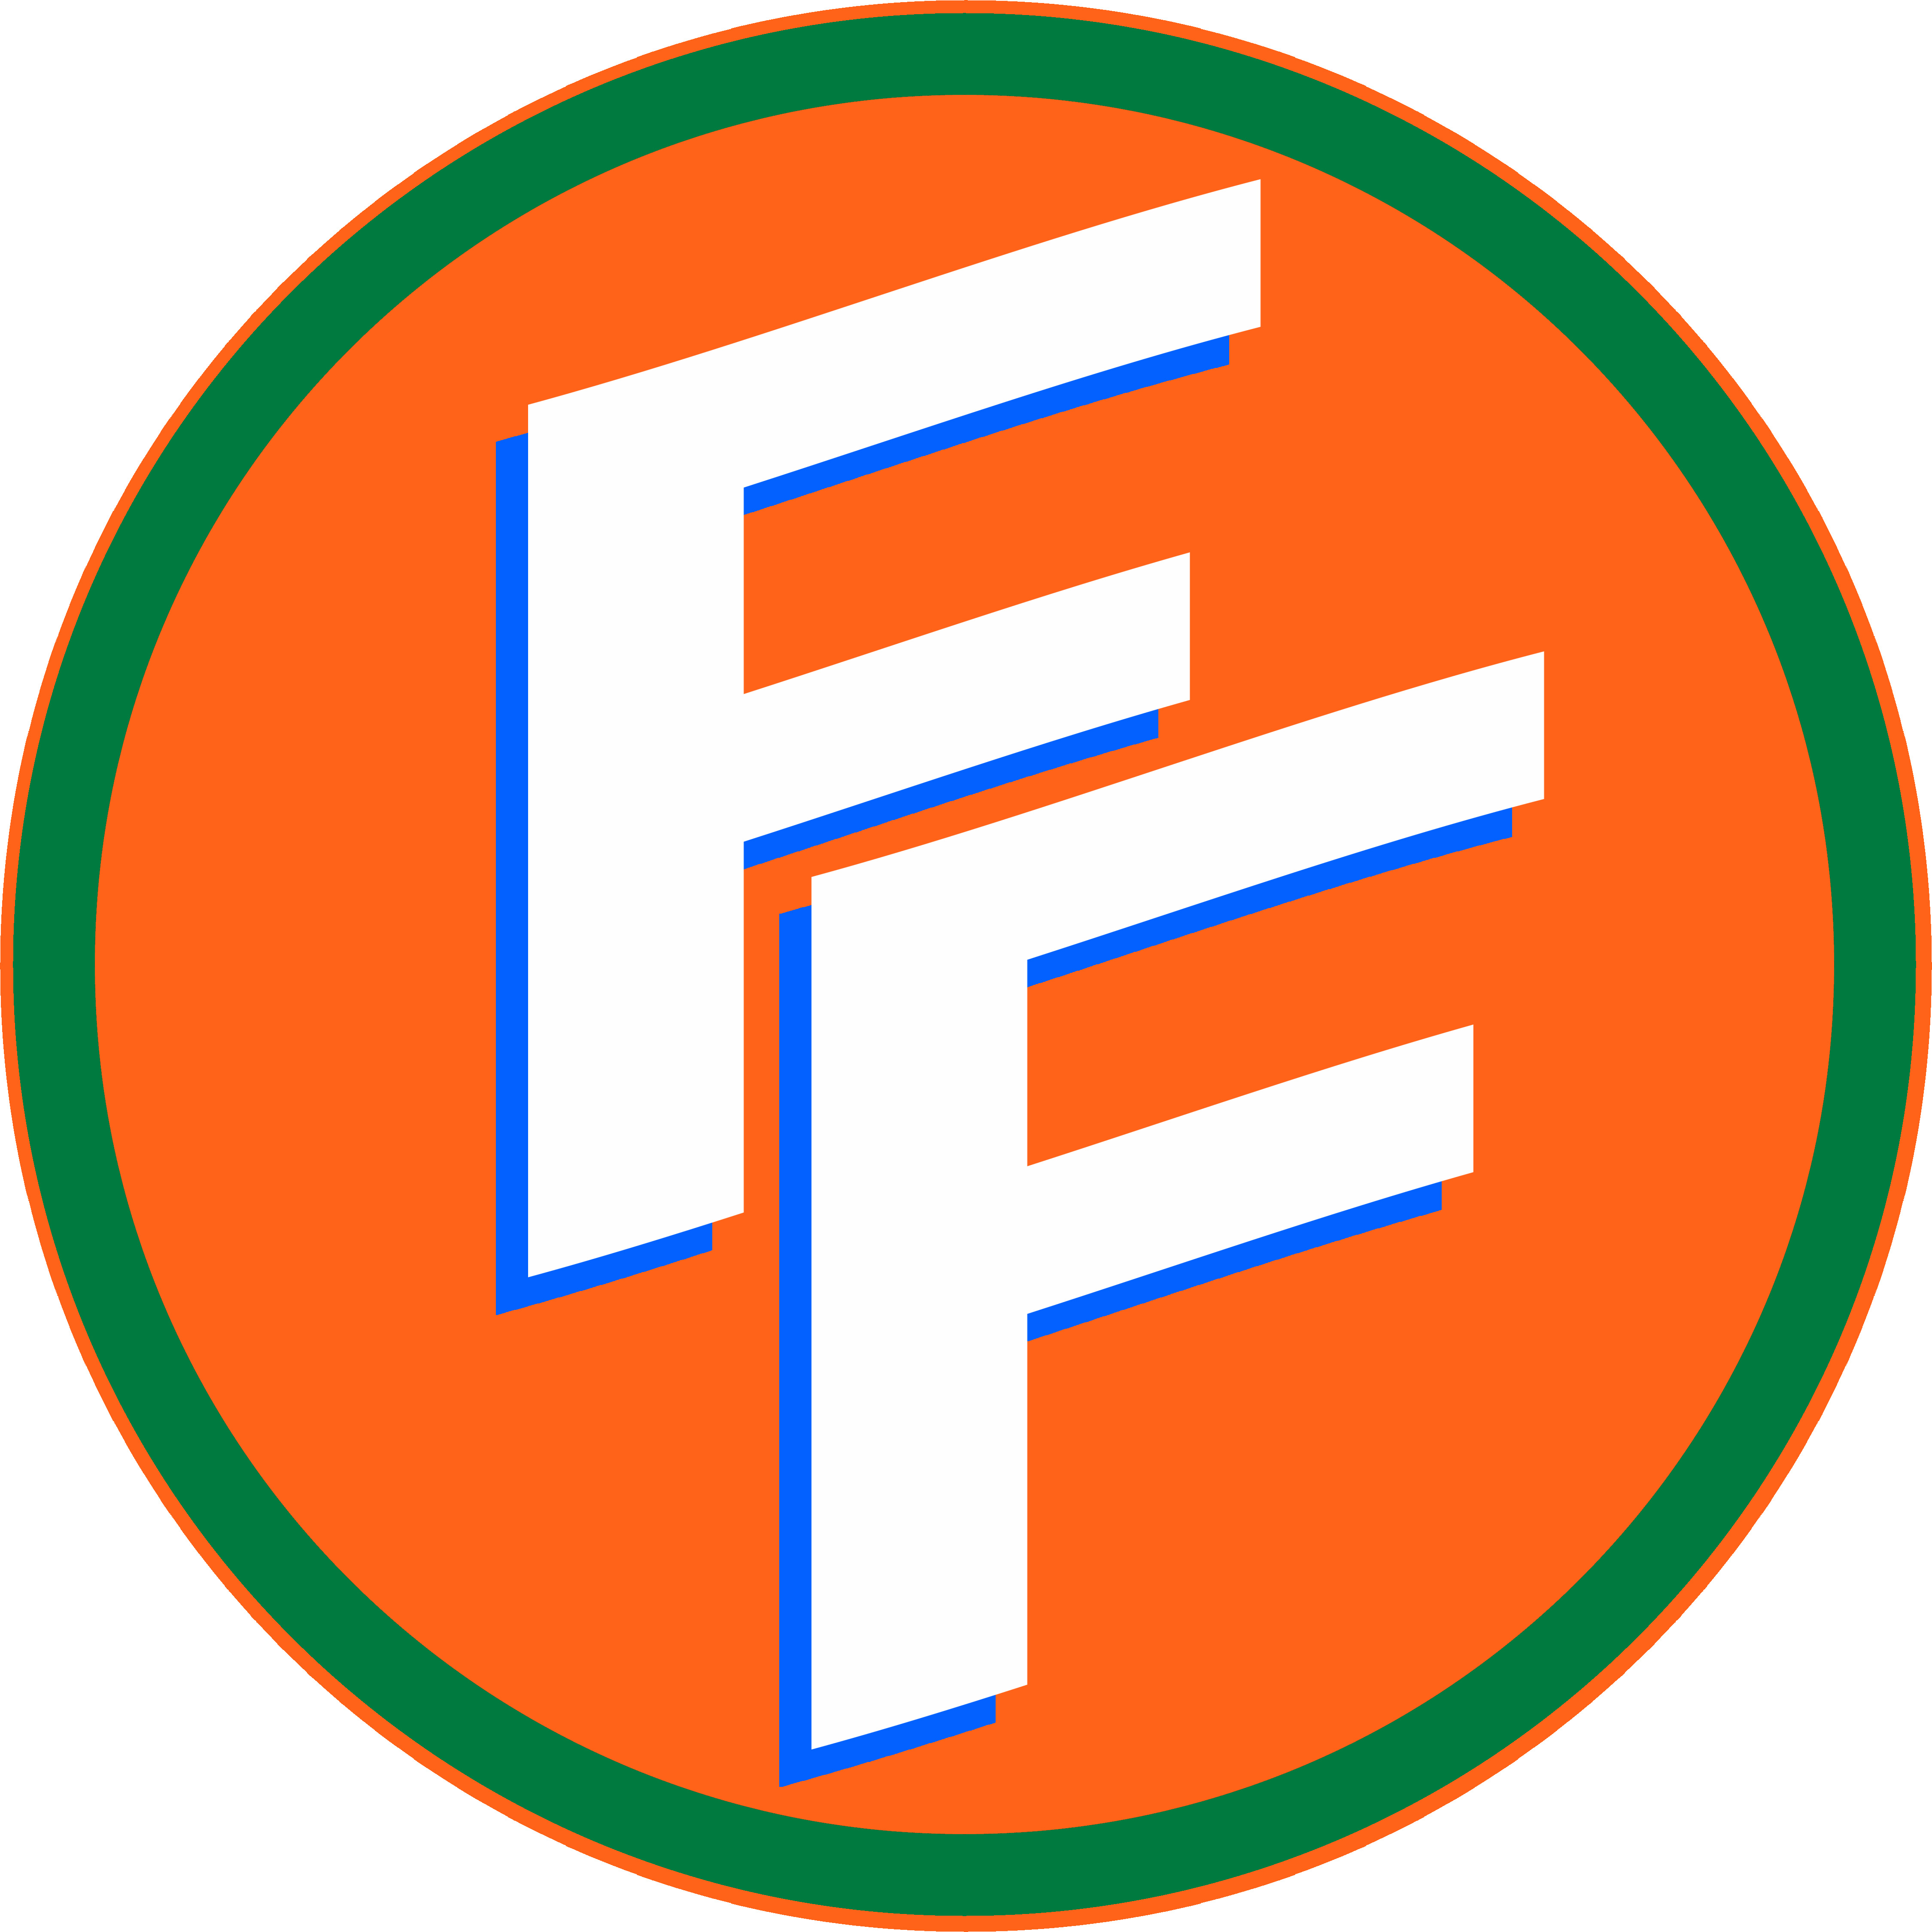 FF logo all great colours.jpg